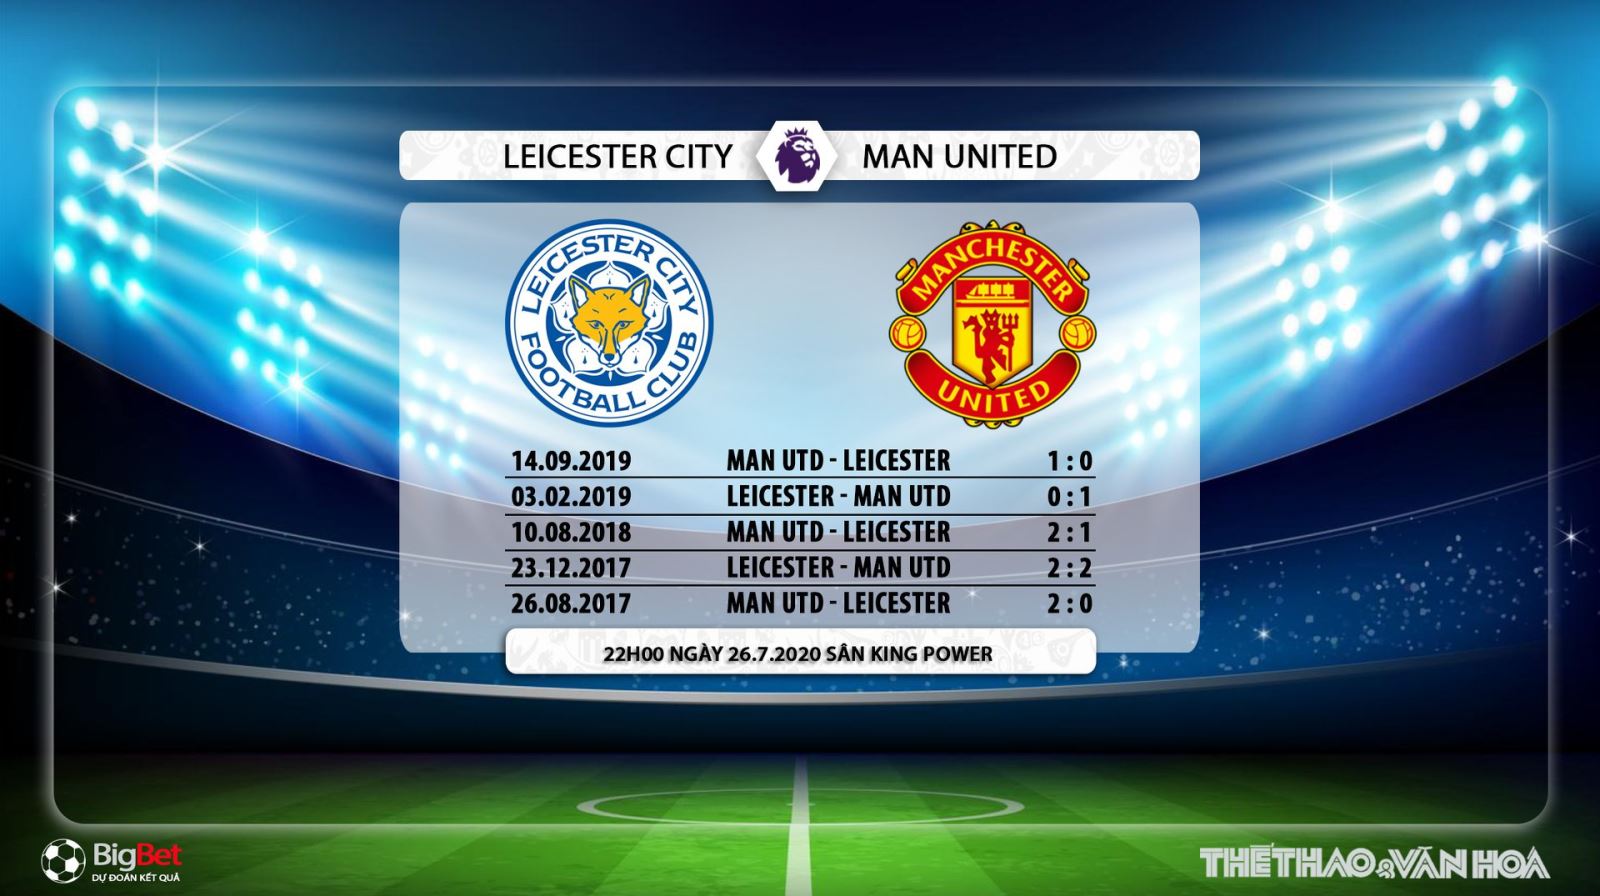 Leicester vs MU, Leicester đấu với MU, trực tiếp bóng đá, trực tiếp Leicester vs MU, nhận định bóng đá Leicester vs MU, nhận định bóng đá, kèo bóng đá, nhận định bóng đá bóng đá